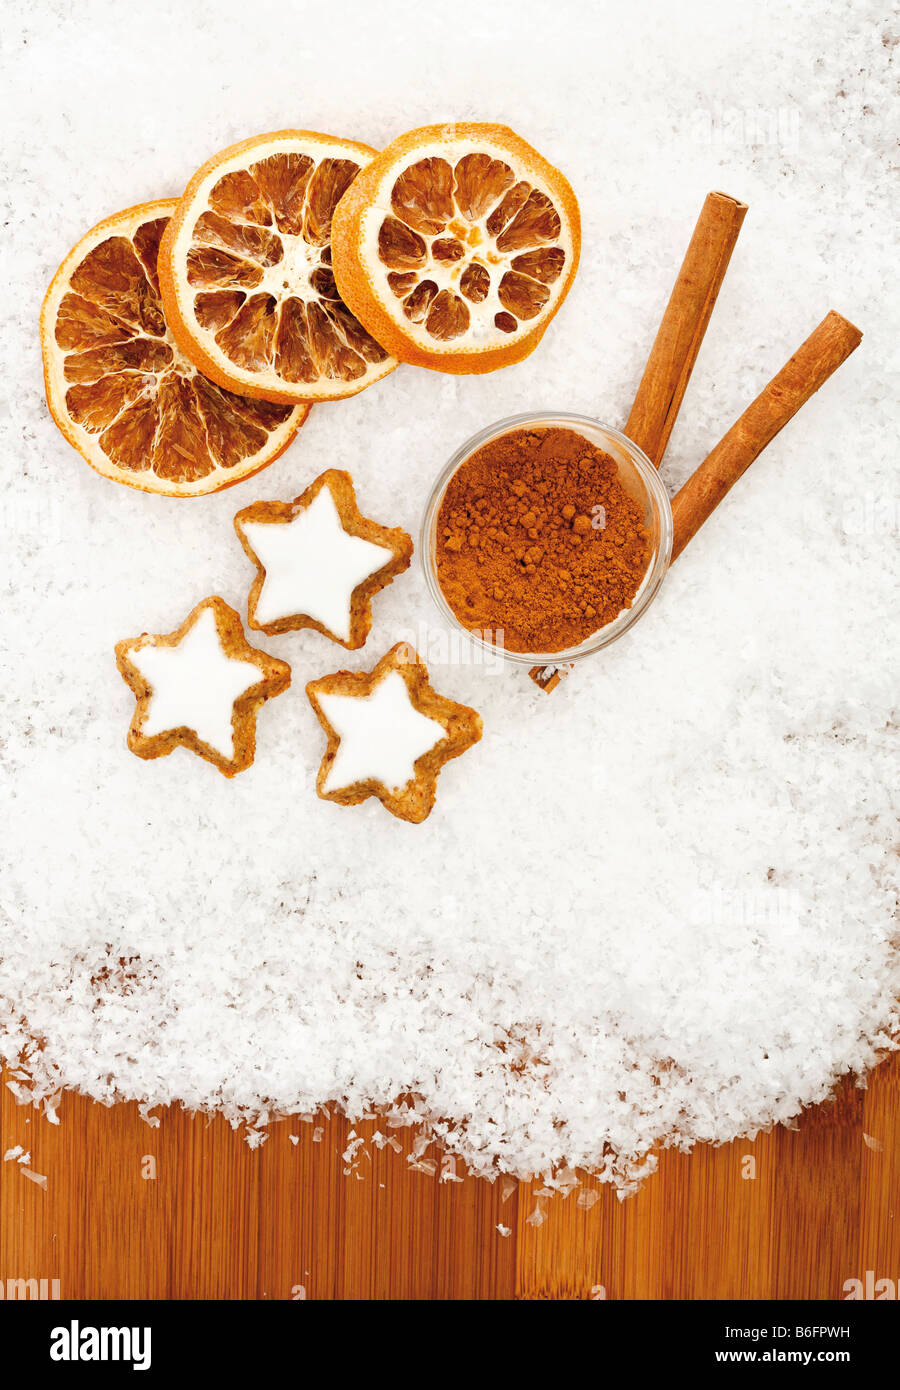 Cinnamon Stars with dried orange slices and cinnamon sticks on snow Stock Photo